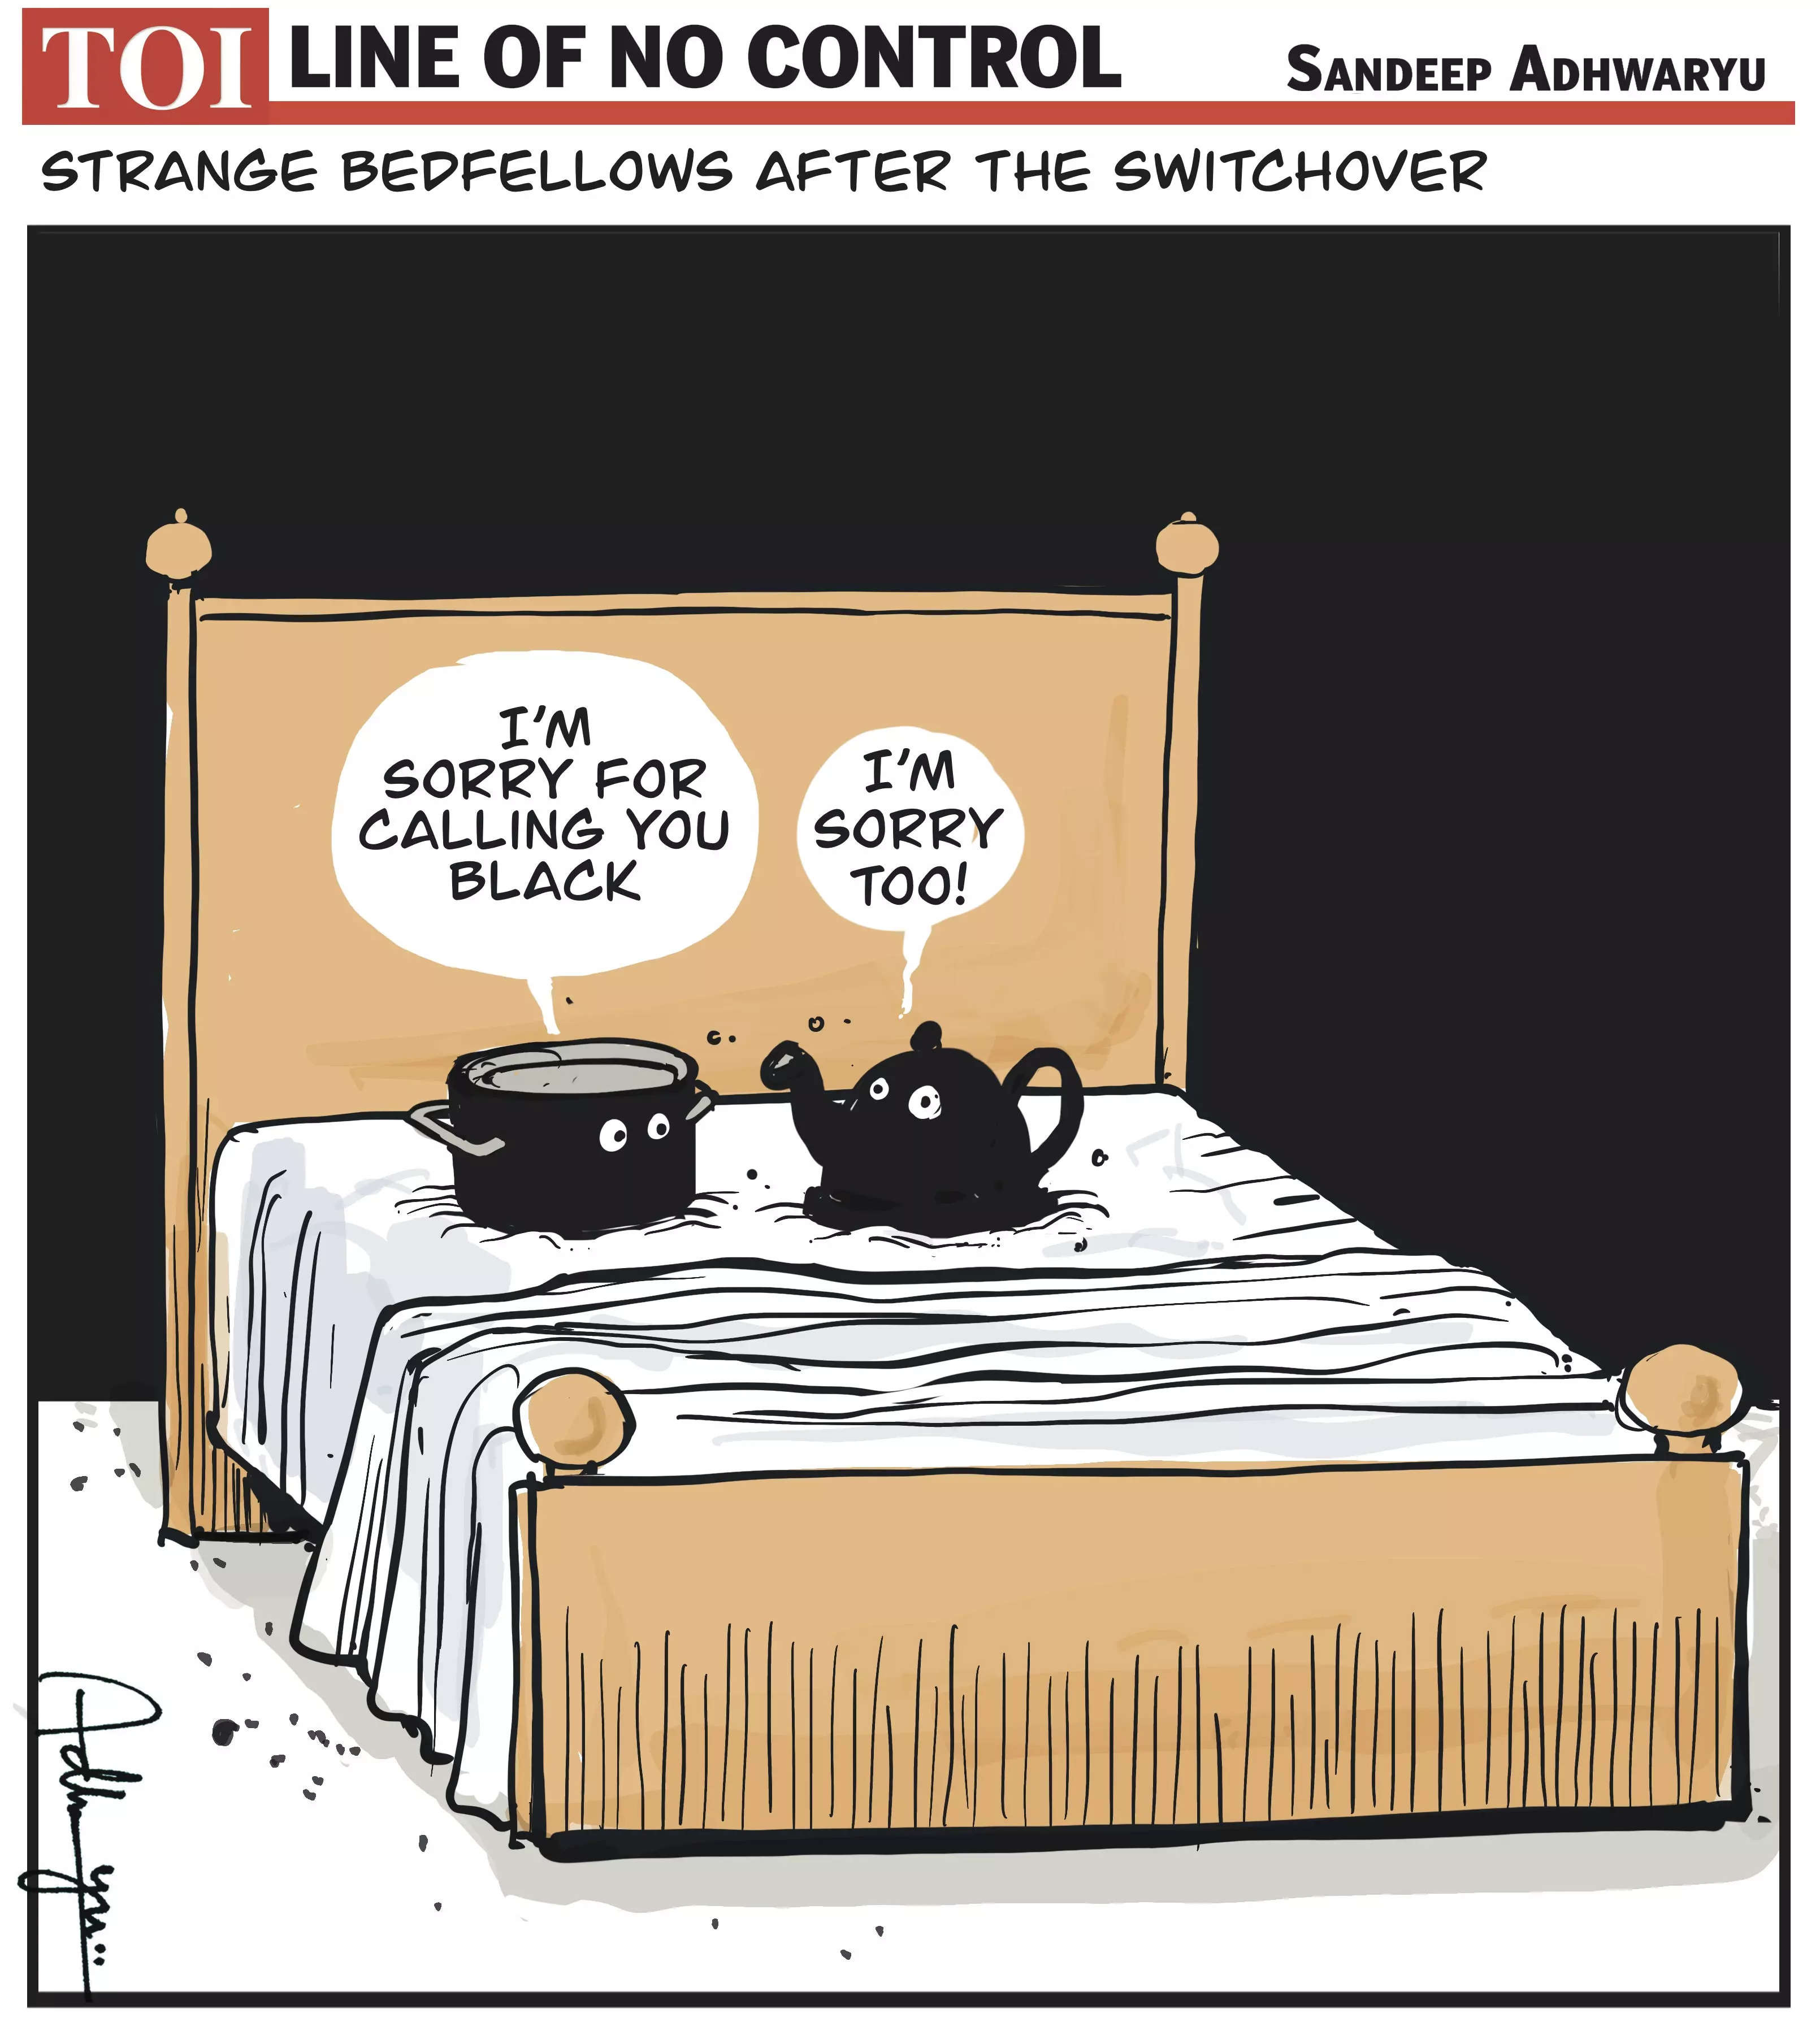 Strange bedfellows